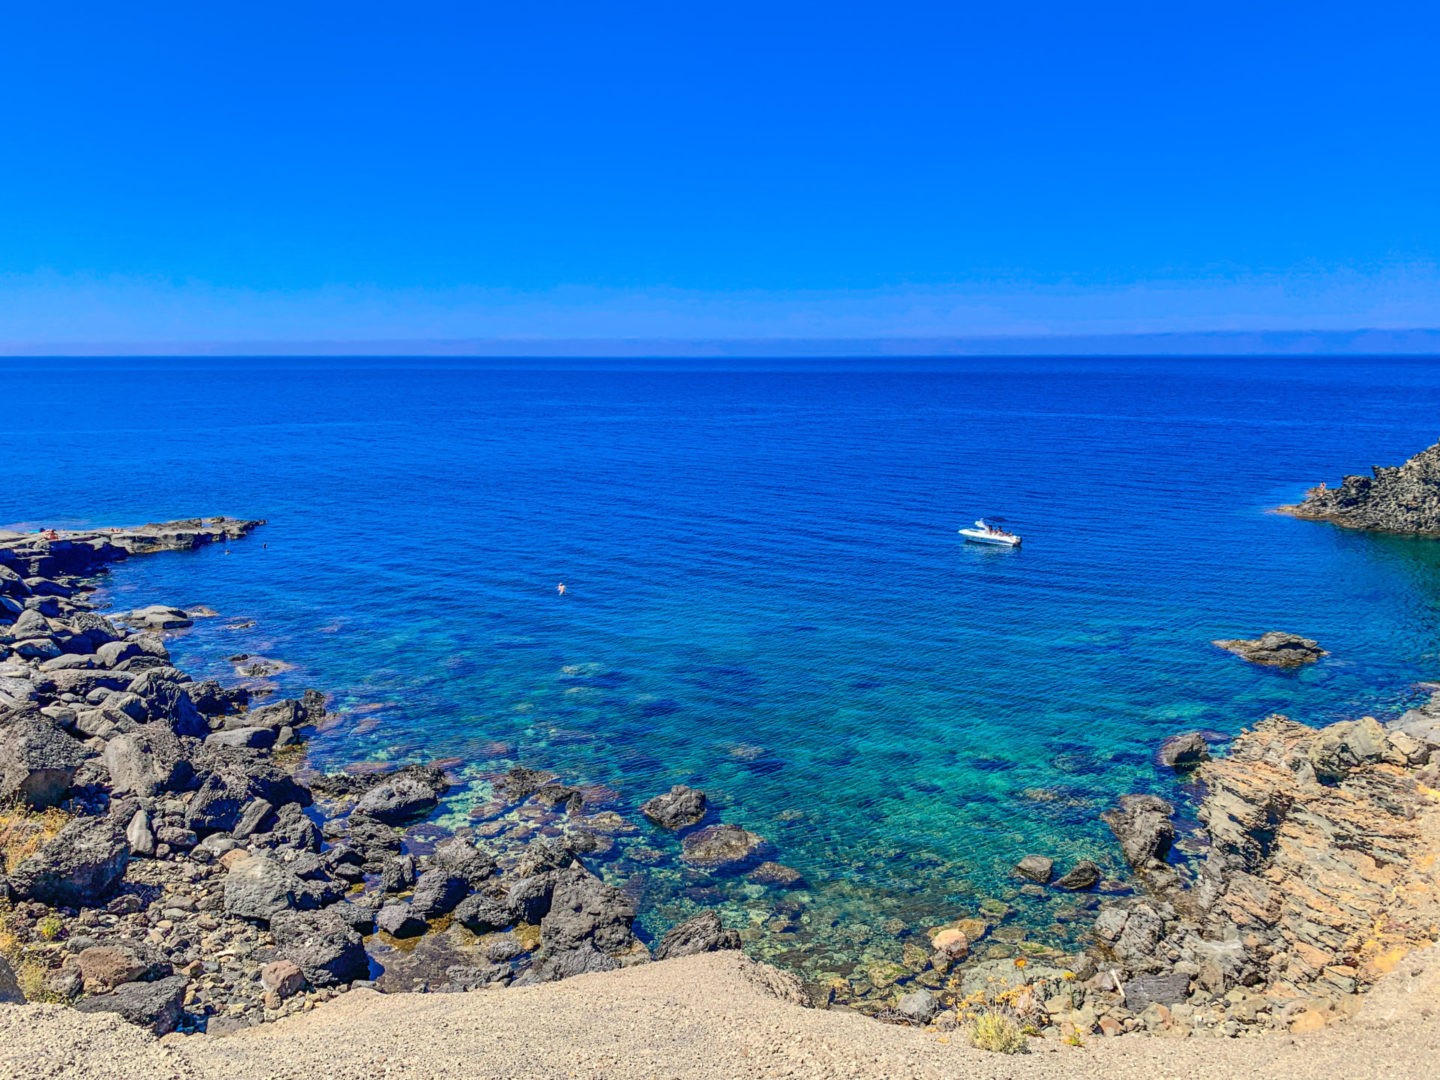 Pantelleria, what to see, where to eat and sleep